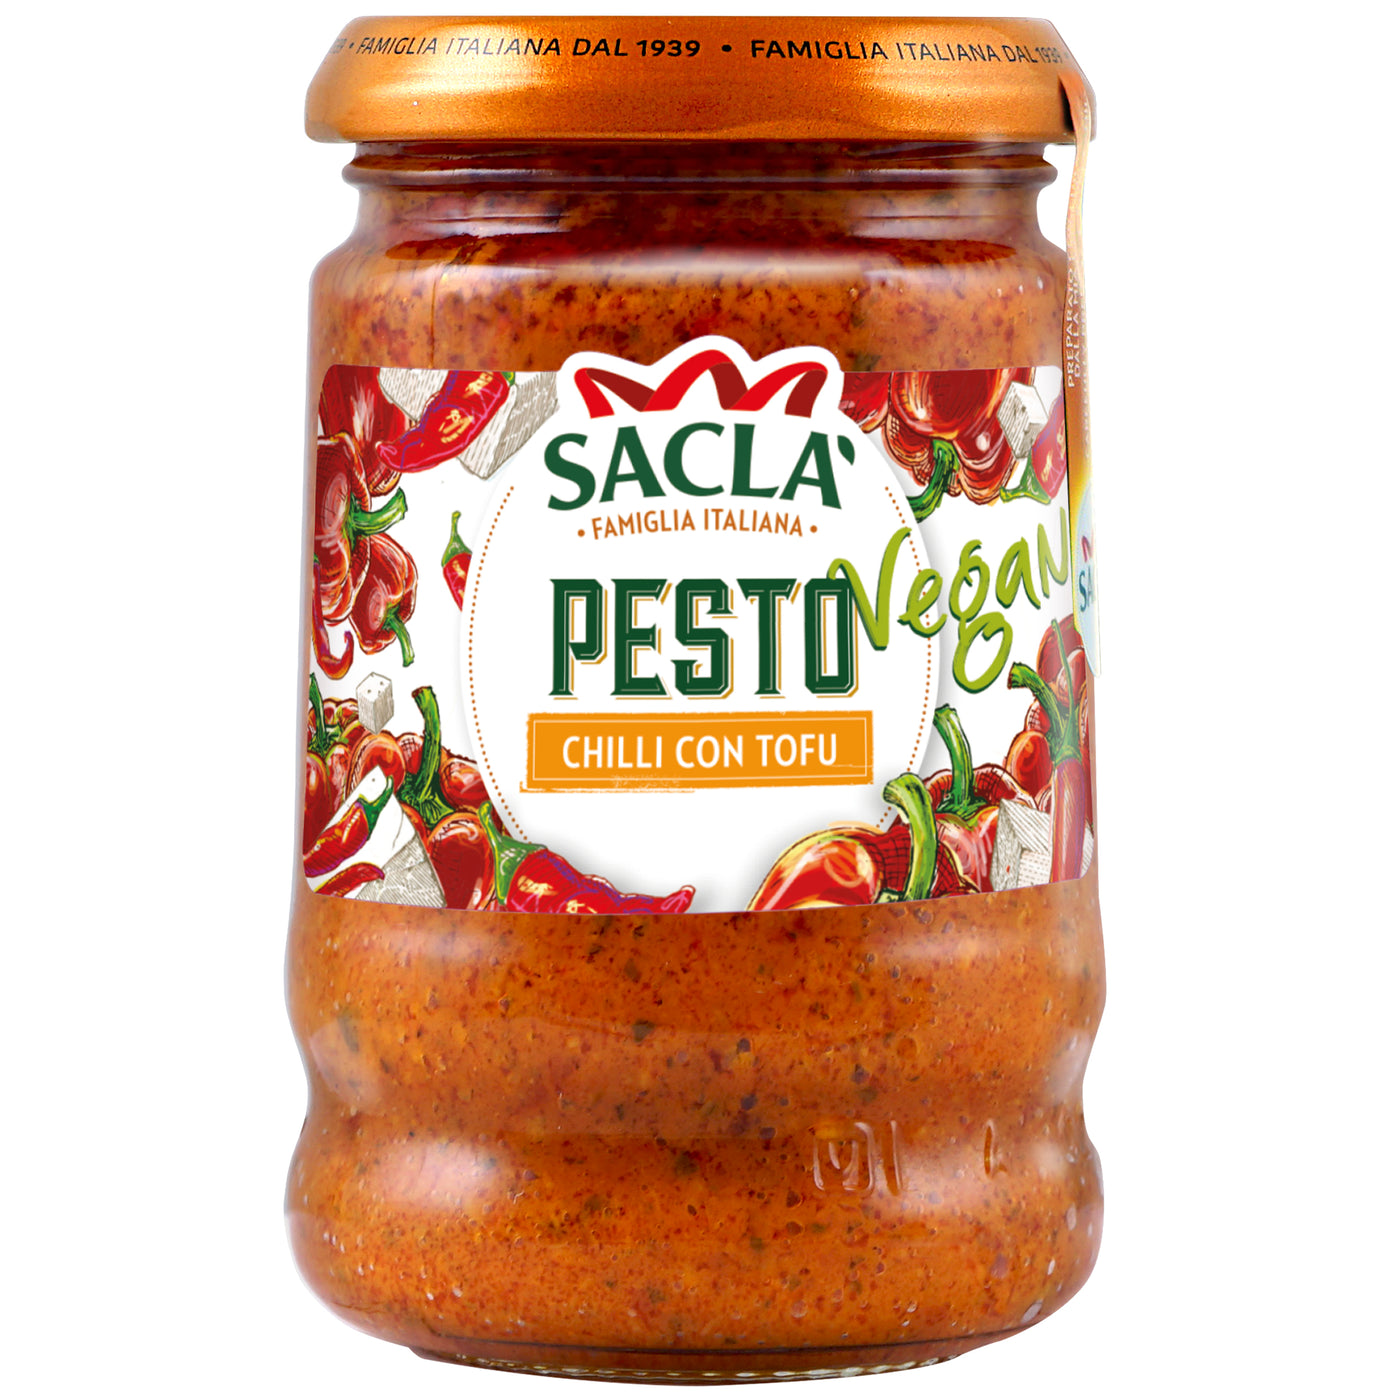 Sacla Vegan Chili Pesto 190g